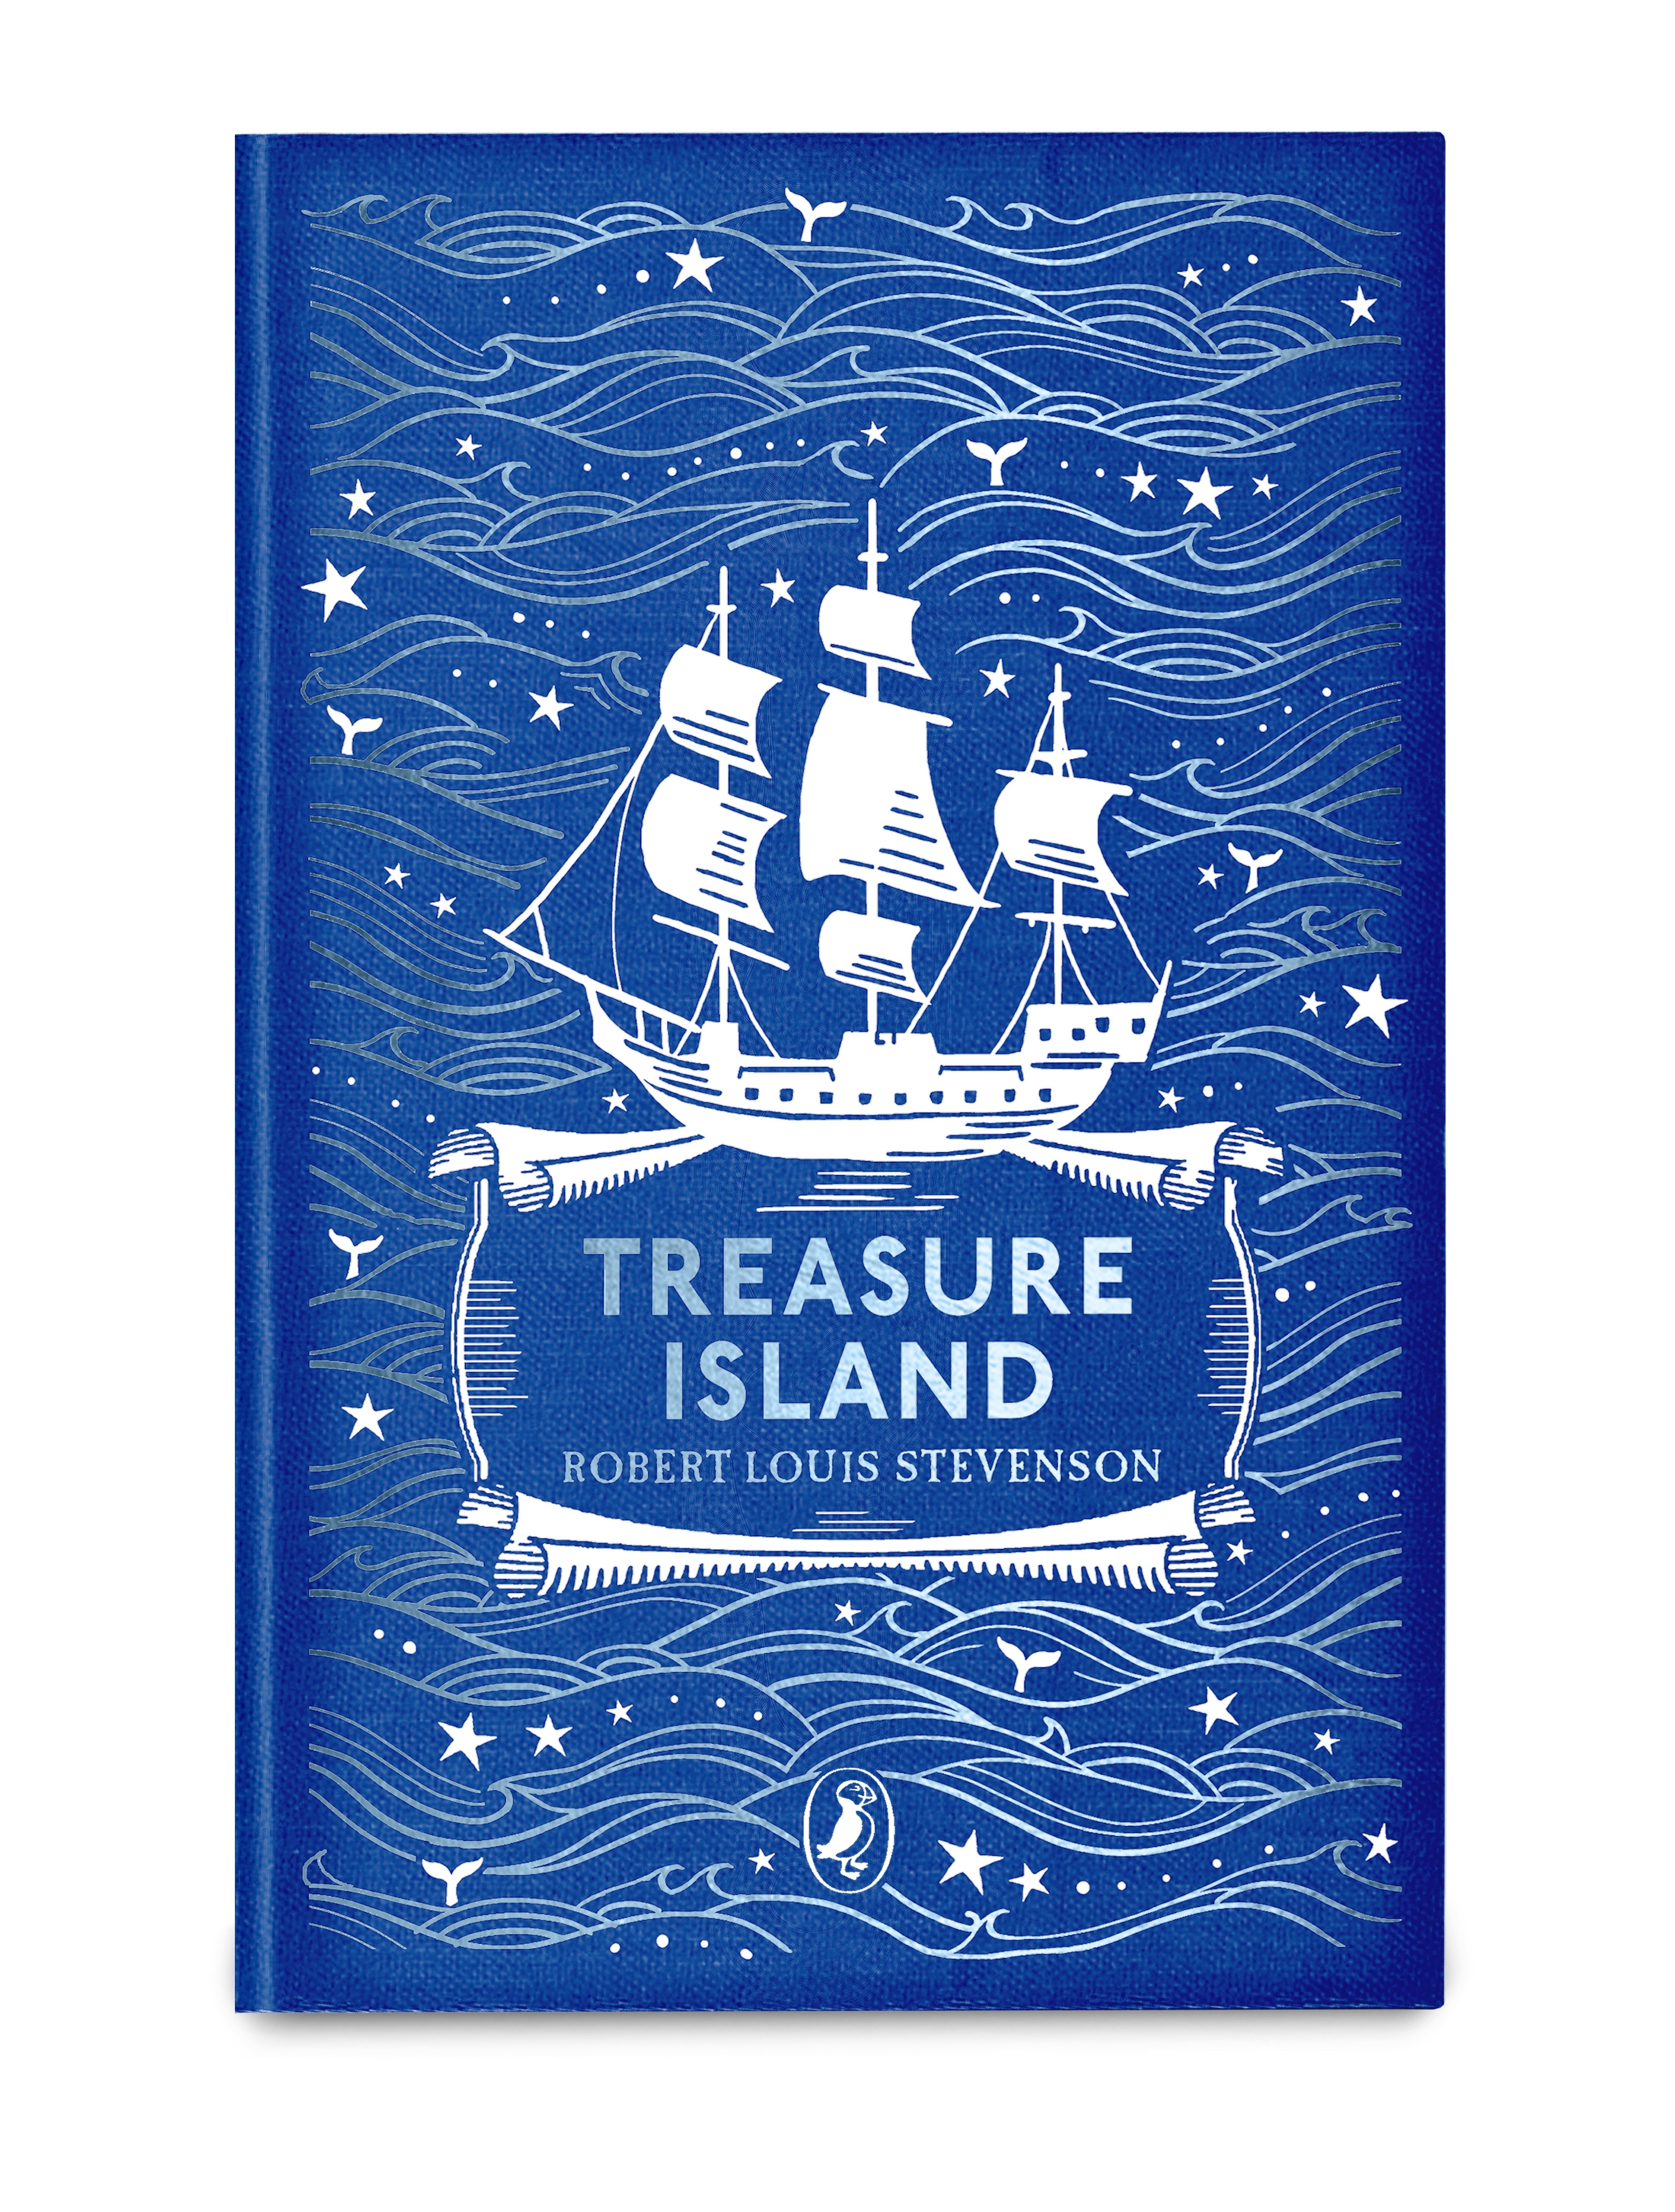 Book “Treasure Island” by Robert Louis Stevenson — September 5, 2019